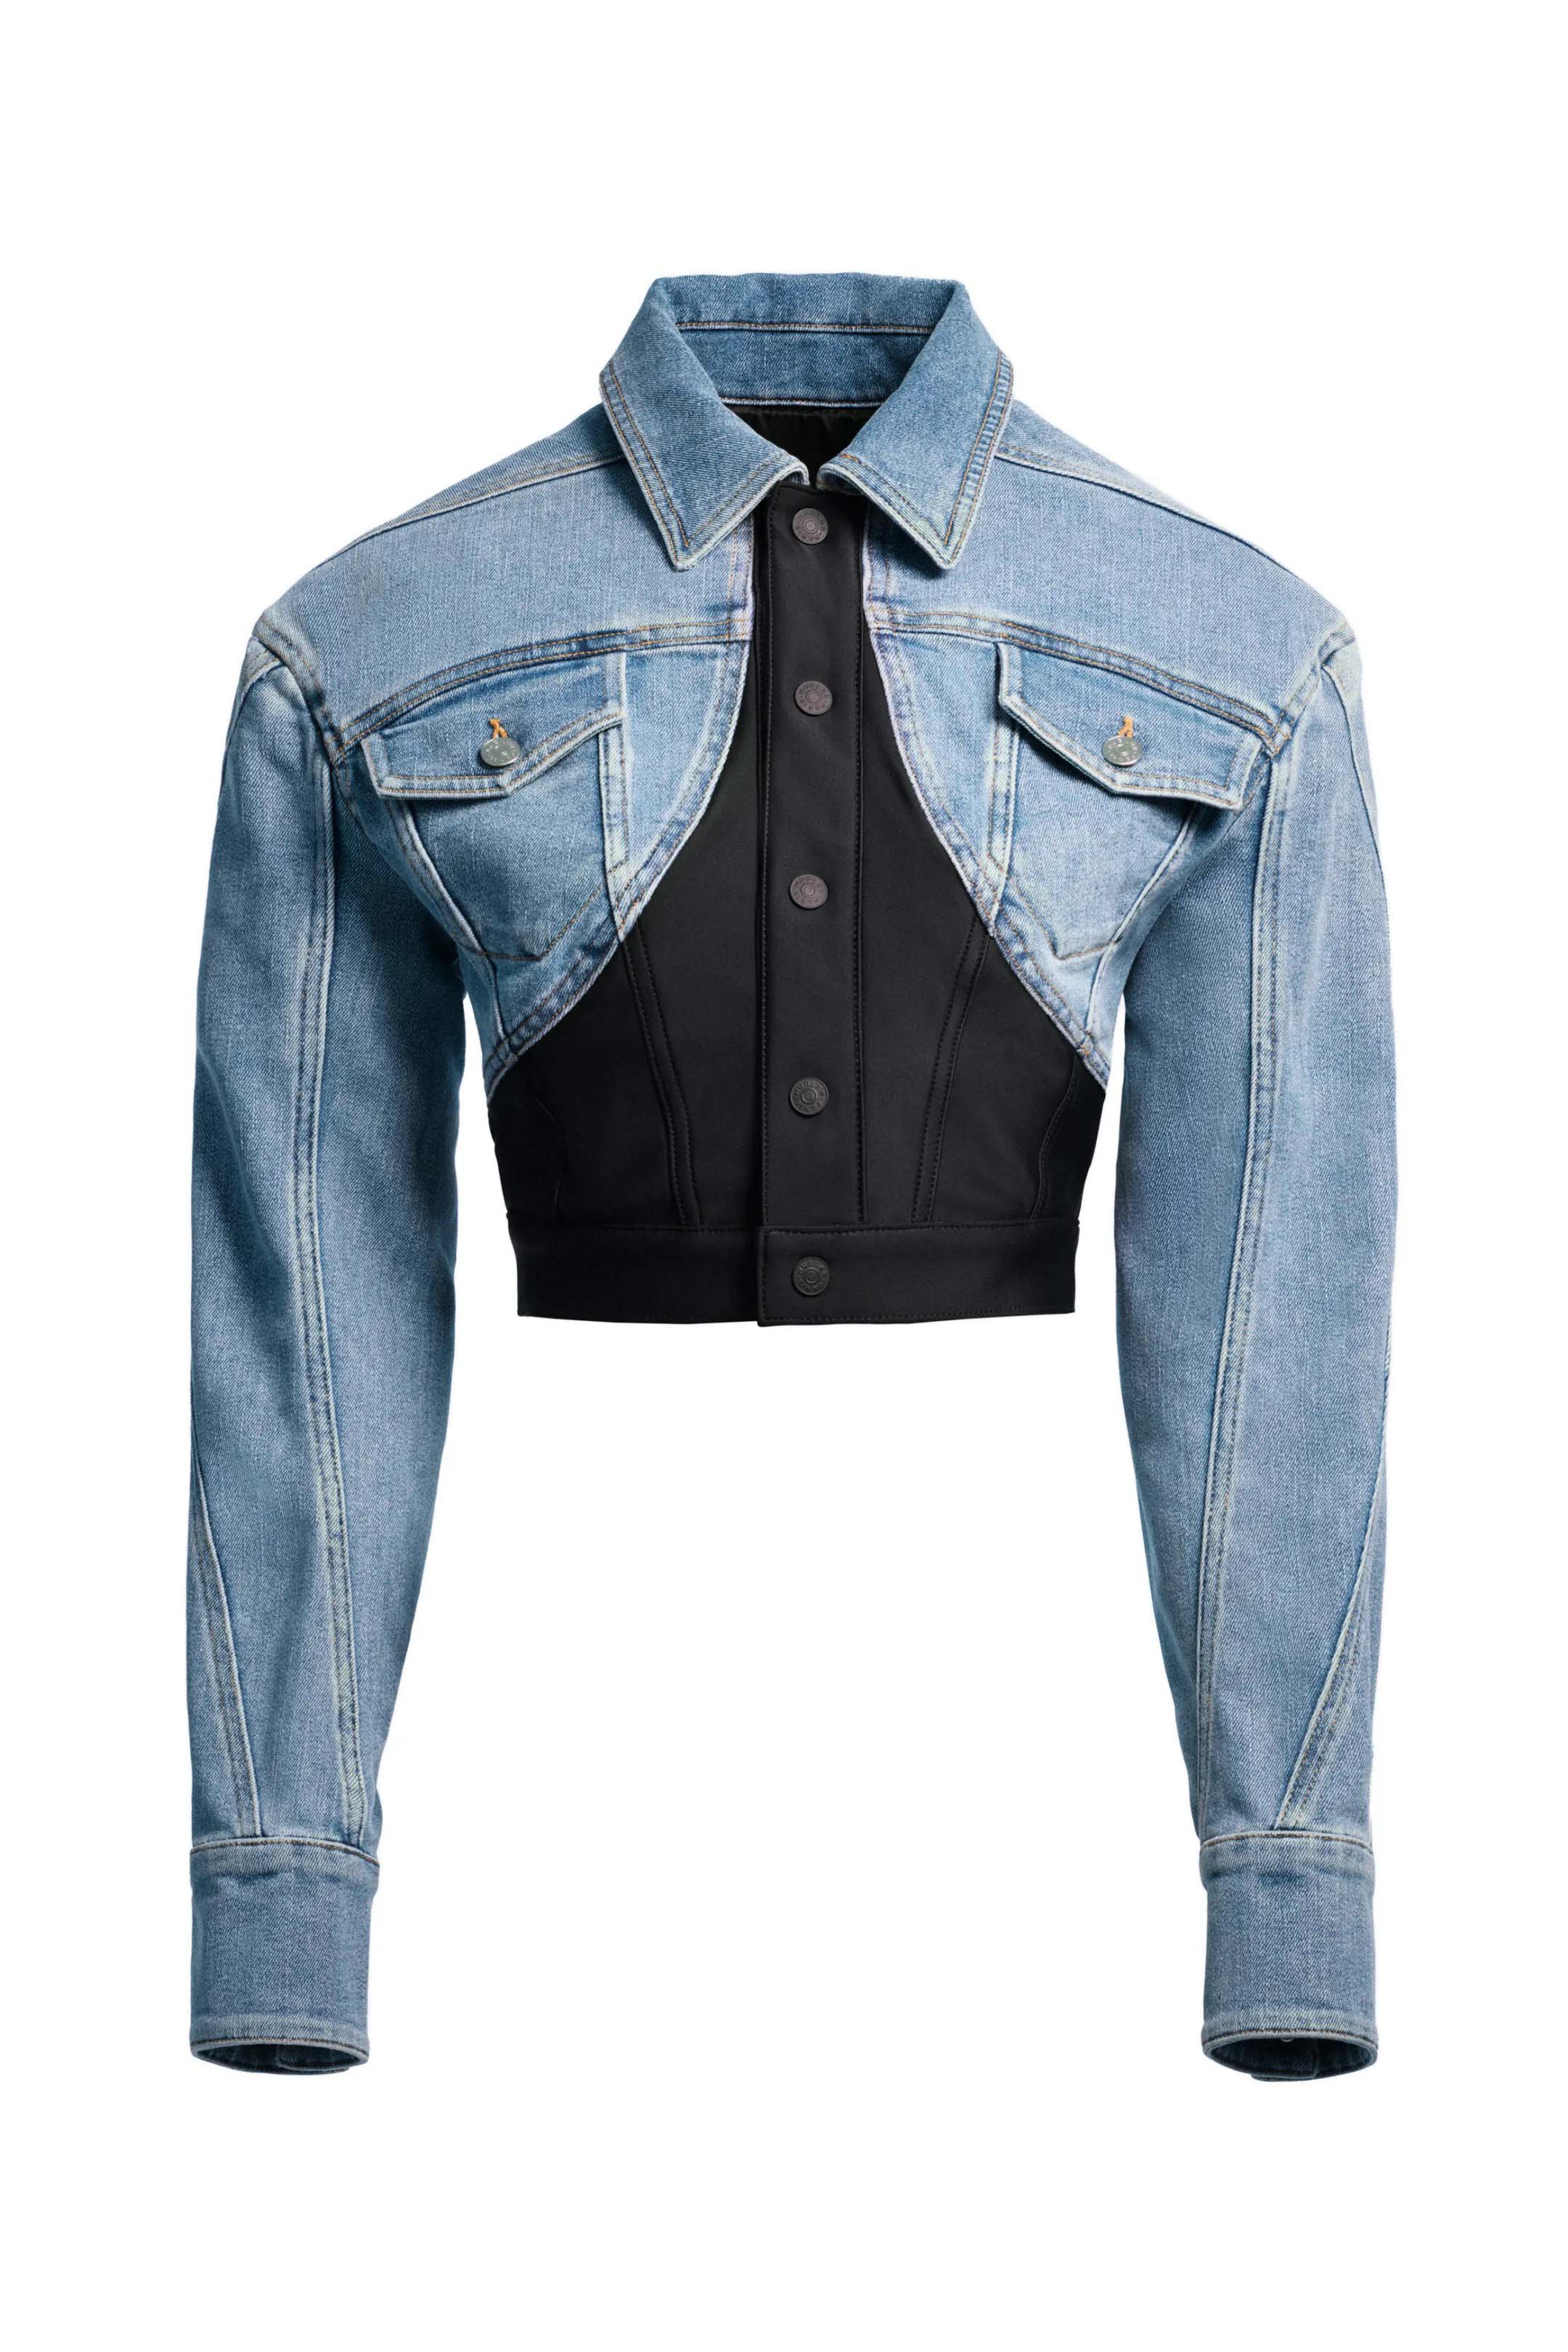 Mugler H&M Defined-Waist Denim Crop Jacket Light Denim Blue/Black 